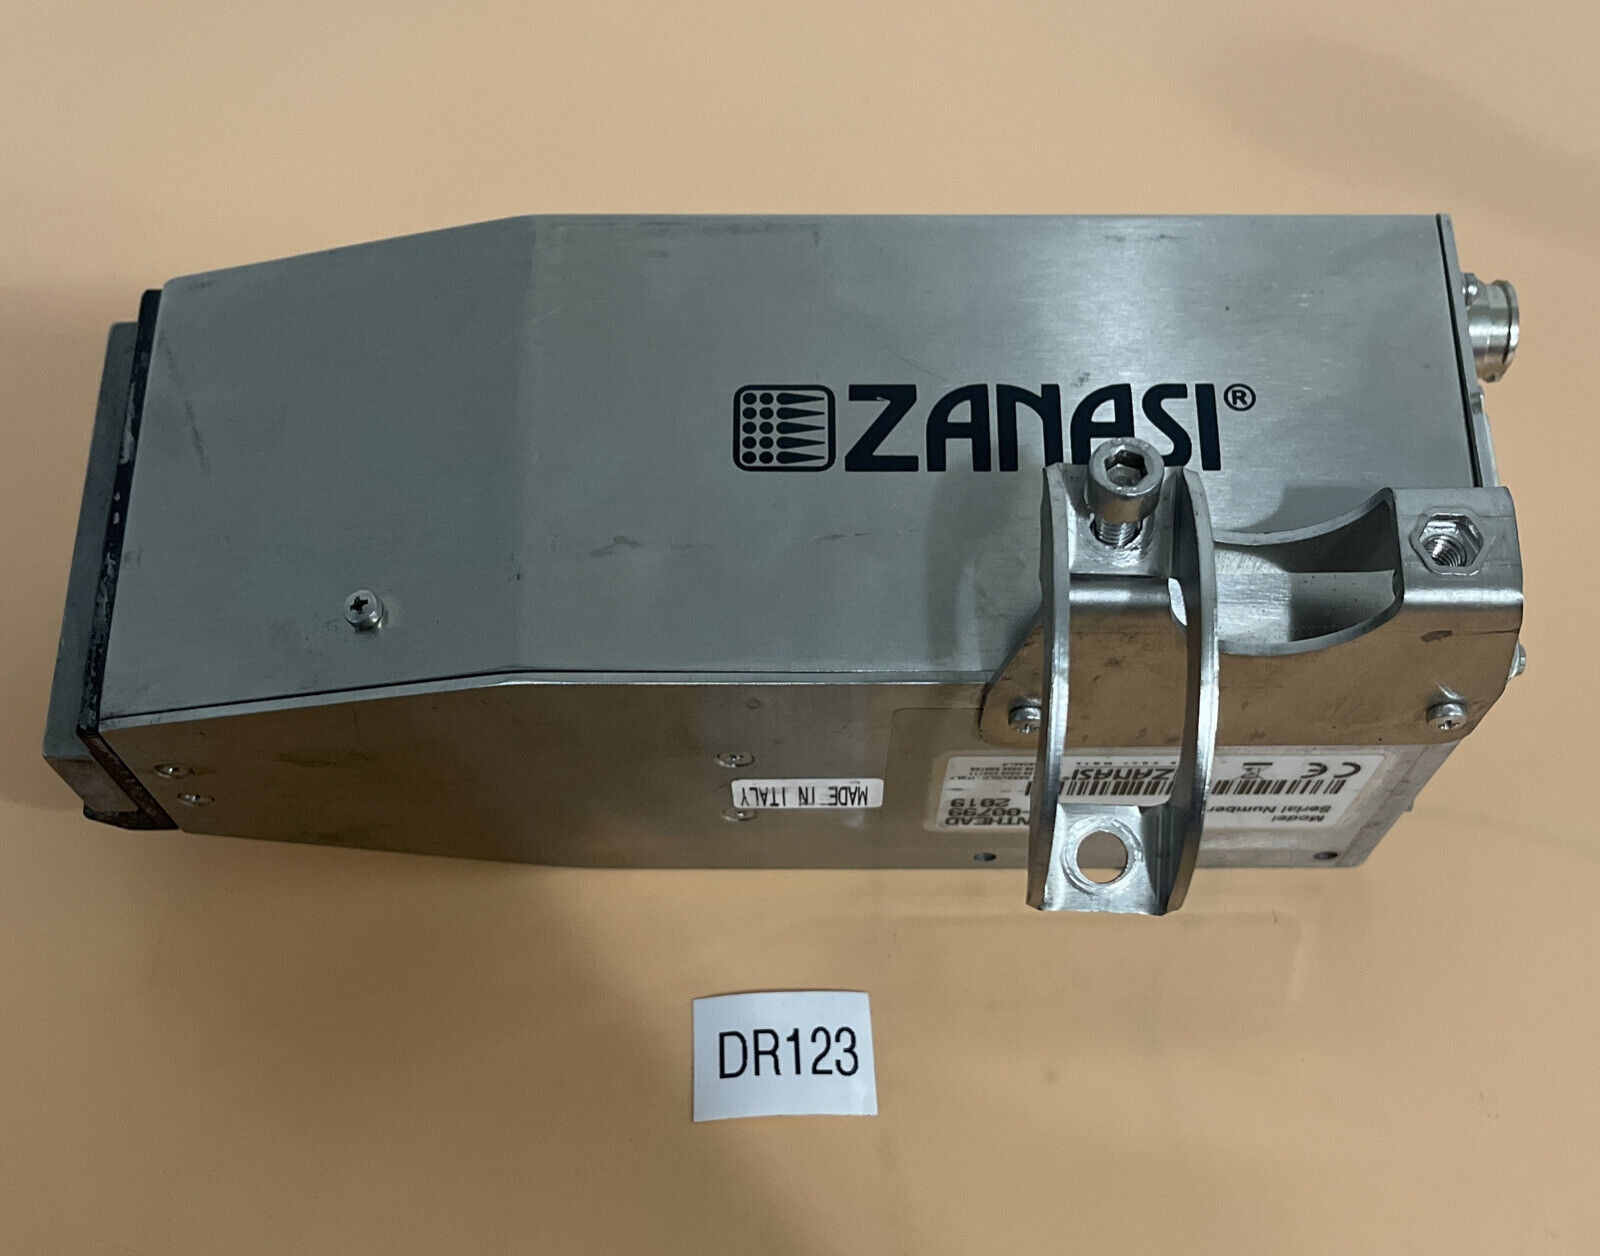 PREOWNED-Italian Made (2019) ZANASI NZ PRINTHEAD Stenciling Equipment + Warranty